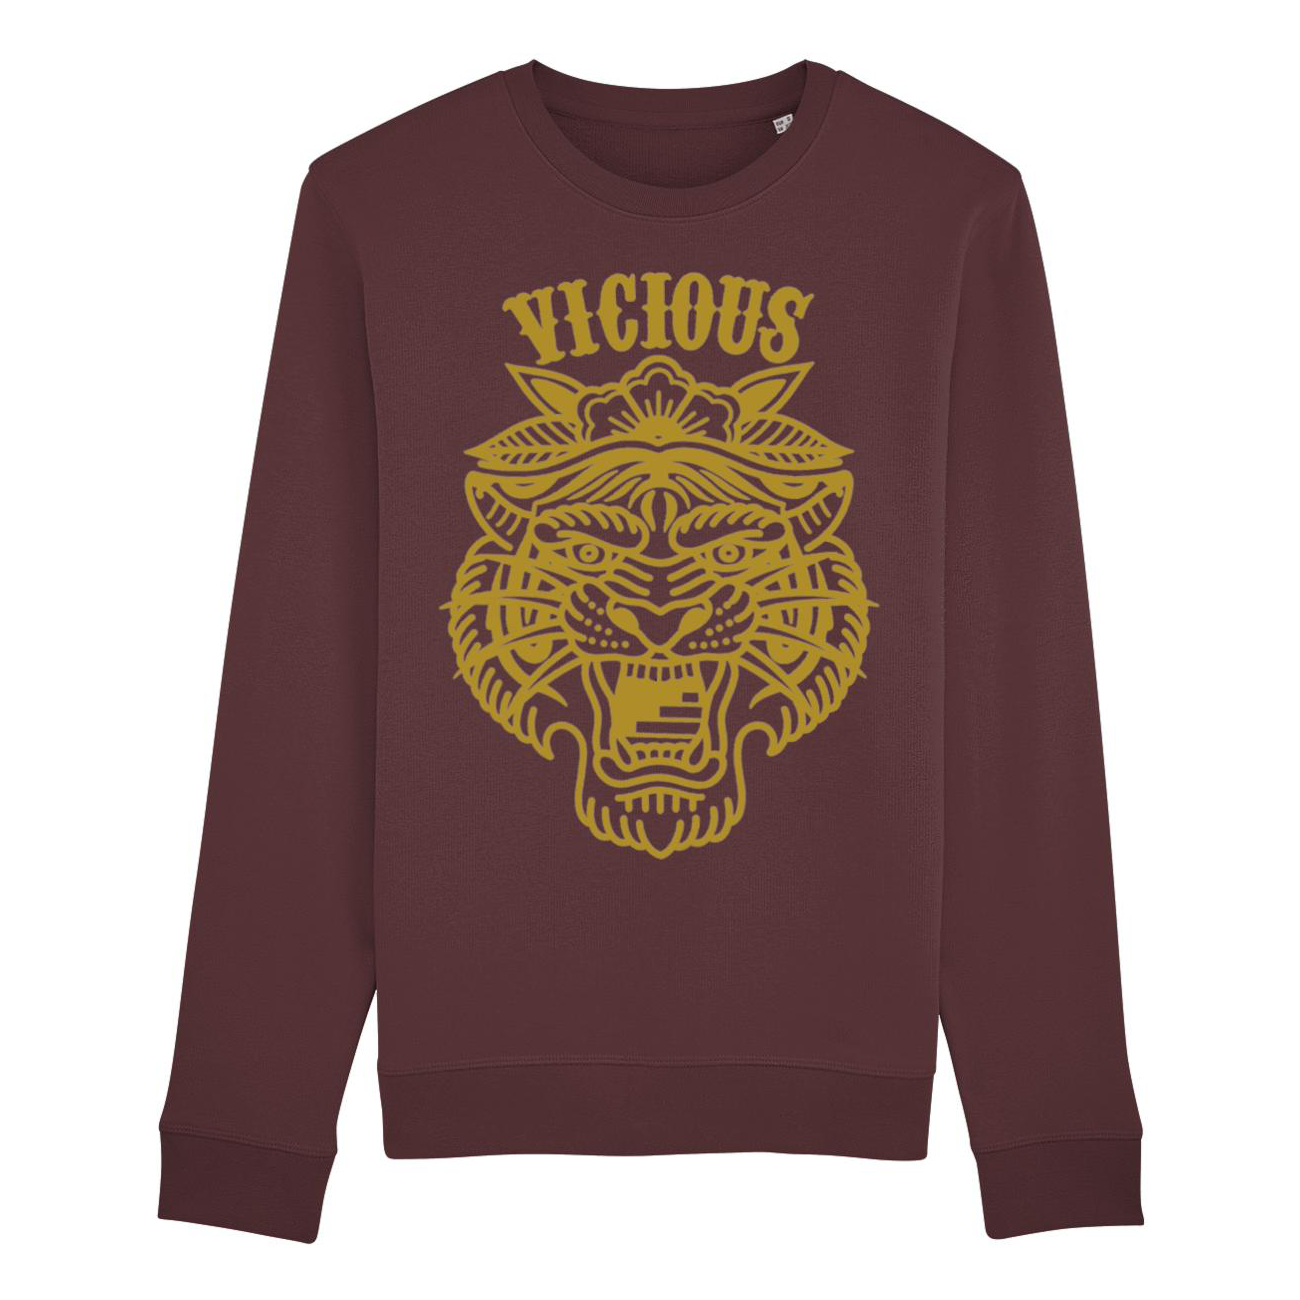 Dry Stone Vicious Tiger - Burgundy and Gold Sweatshirt (Unisex)